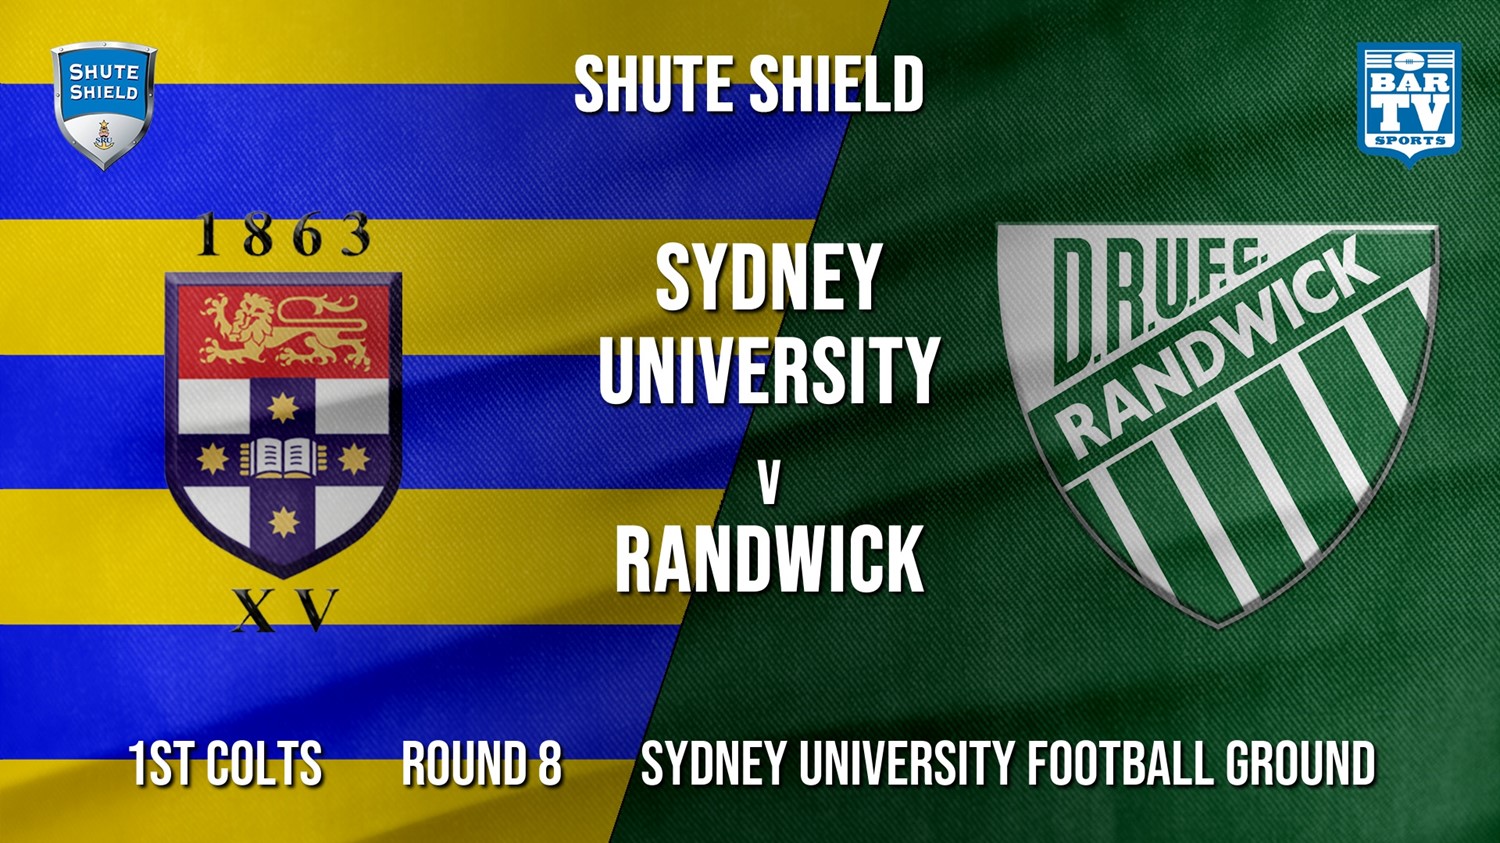 Shute Shield Round 10 - 1st Colts - Sydney University v Randwick (1) Minigame Slate Image